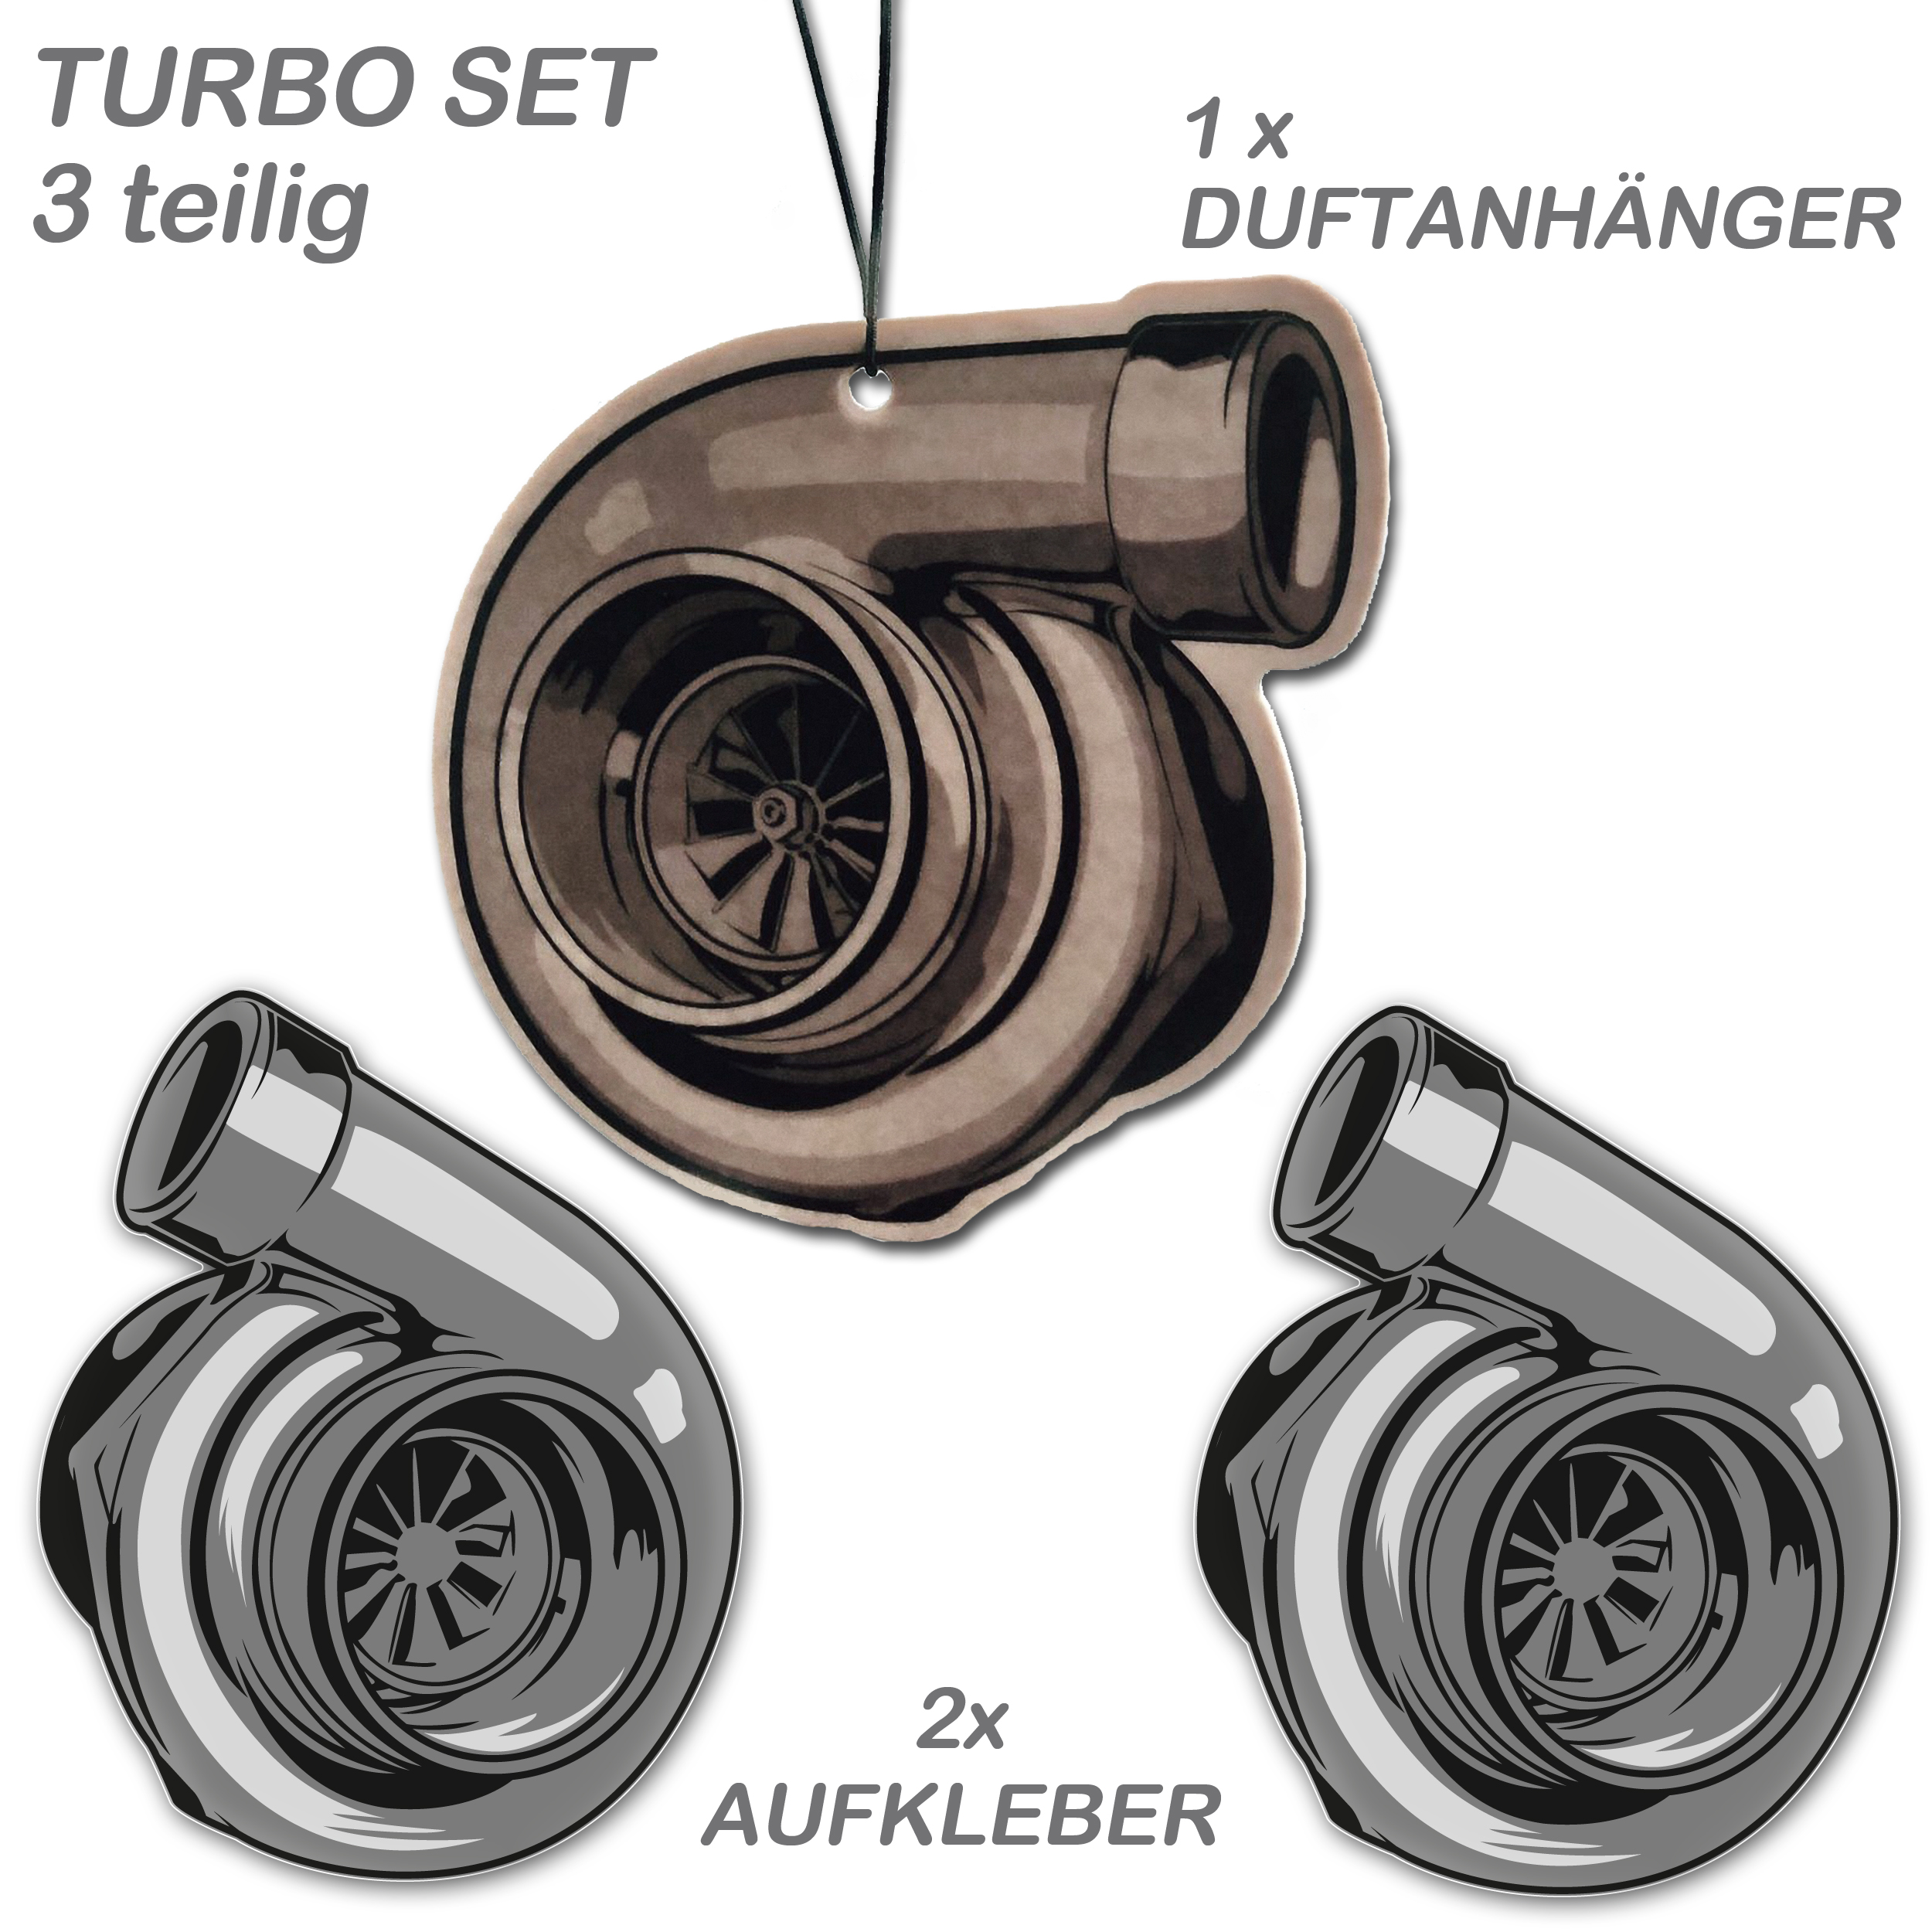 https://www.topdesignshop.de/images/product_images/original_images/car-accessories-turbo-air-fresher-aufkleber-autoduft-set.jpg